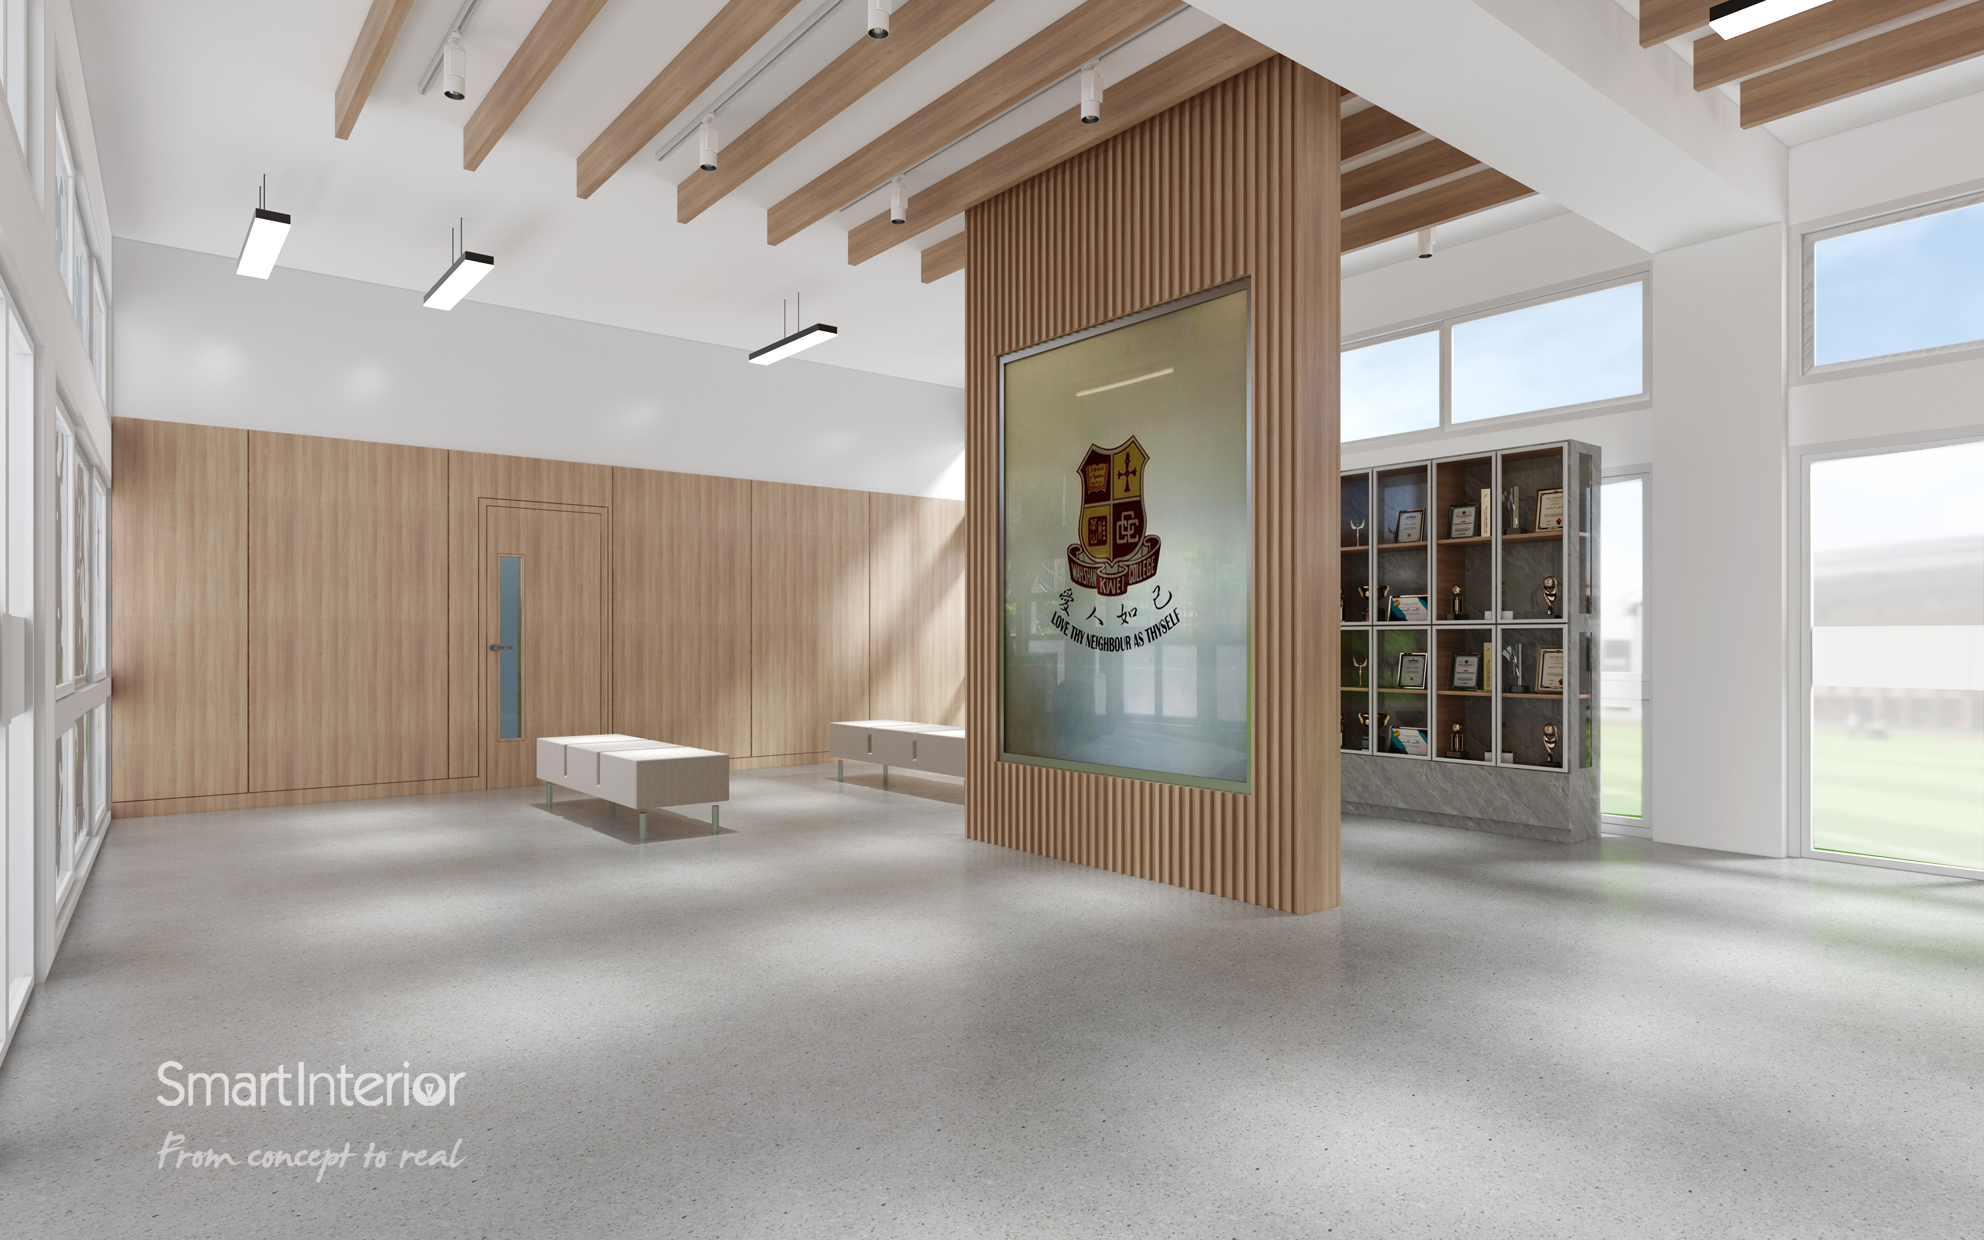 Josephine Kung - Smart Interior Limited - School Lobby Design